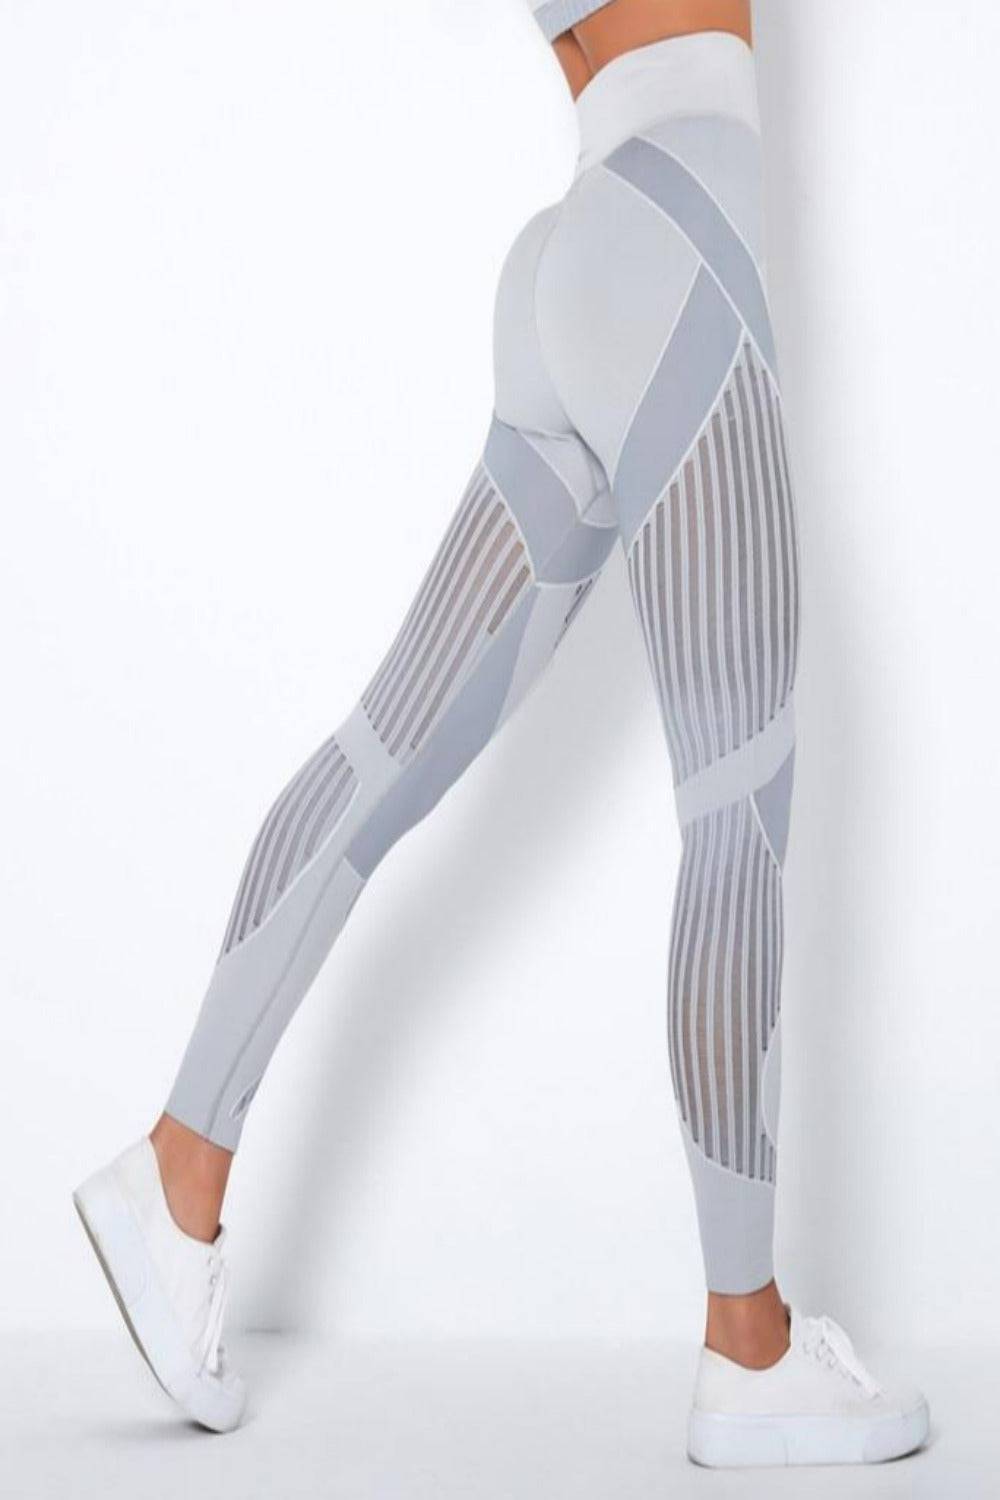 Tummy Control High Waisted Leggings - Light Gray - TGC Boutique - Yoga Leggings